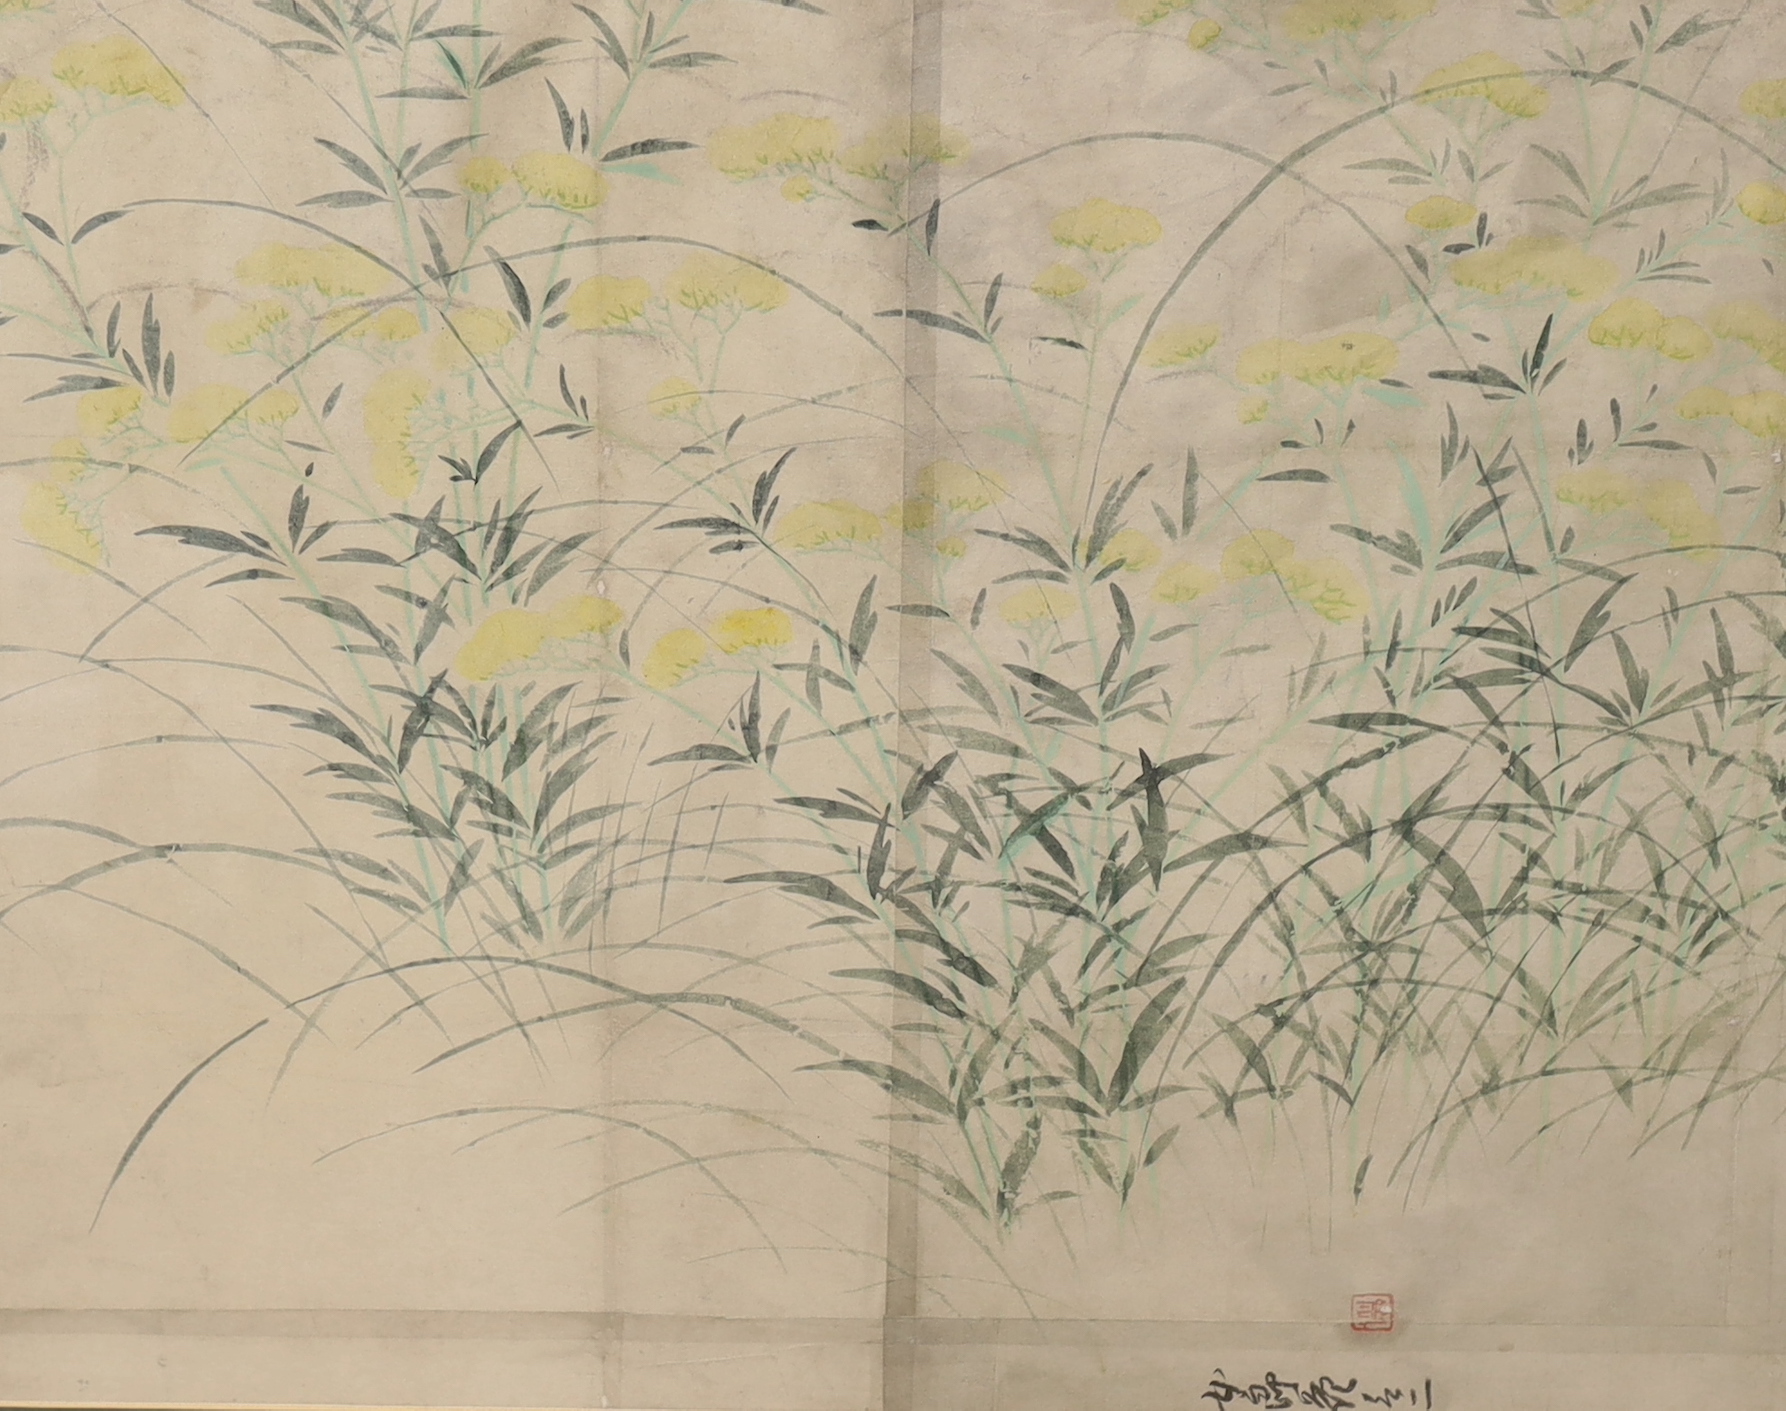 Japanese School, five watercolours, studies of cranes, figures and flowers, signed, largest 88cm x 42 cm